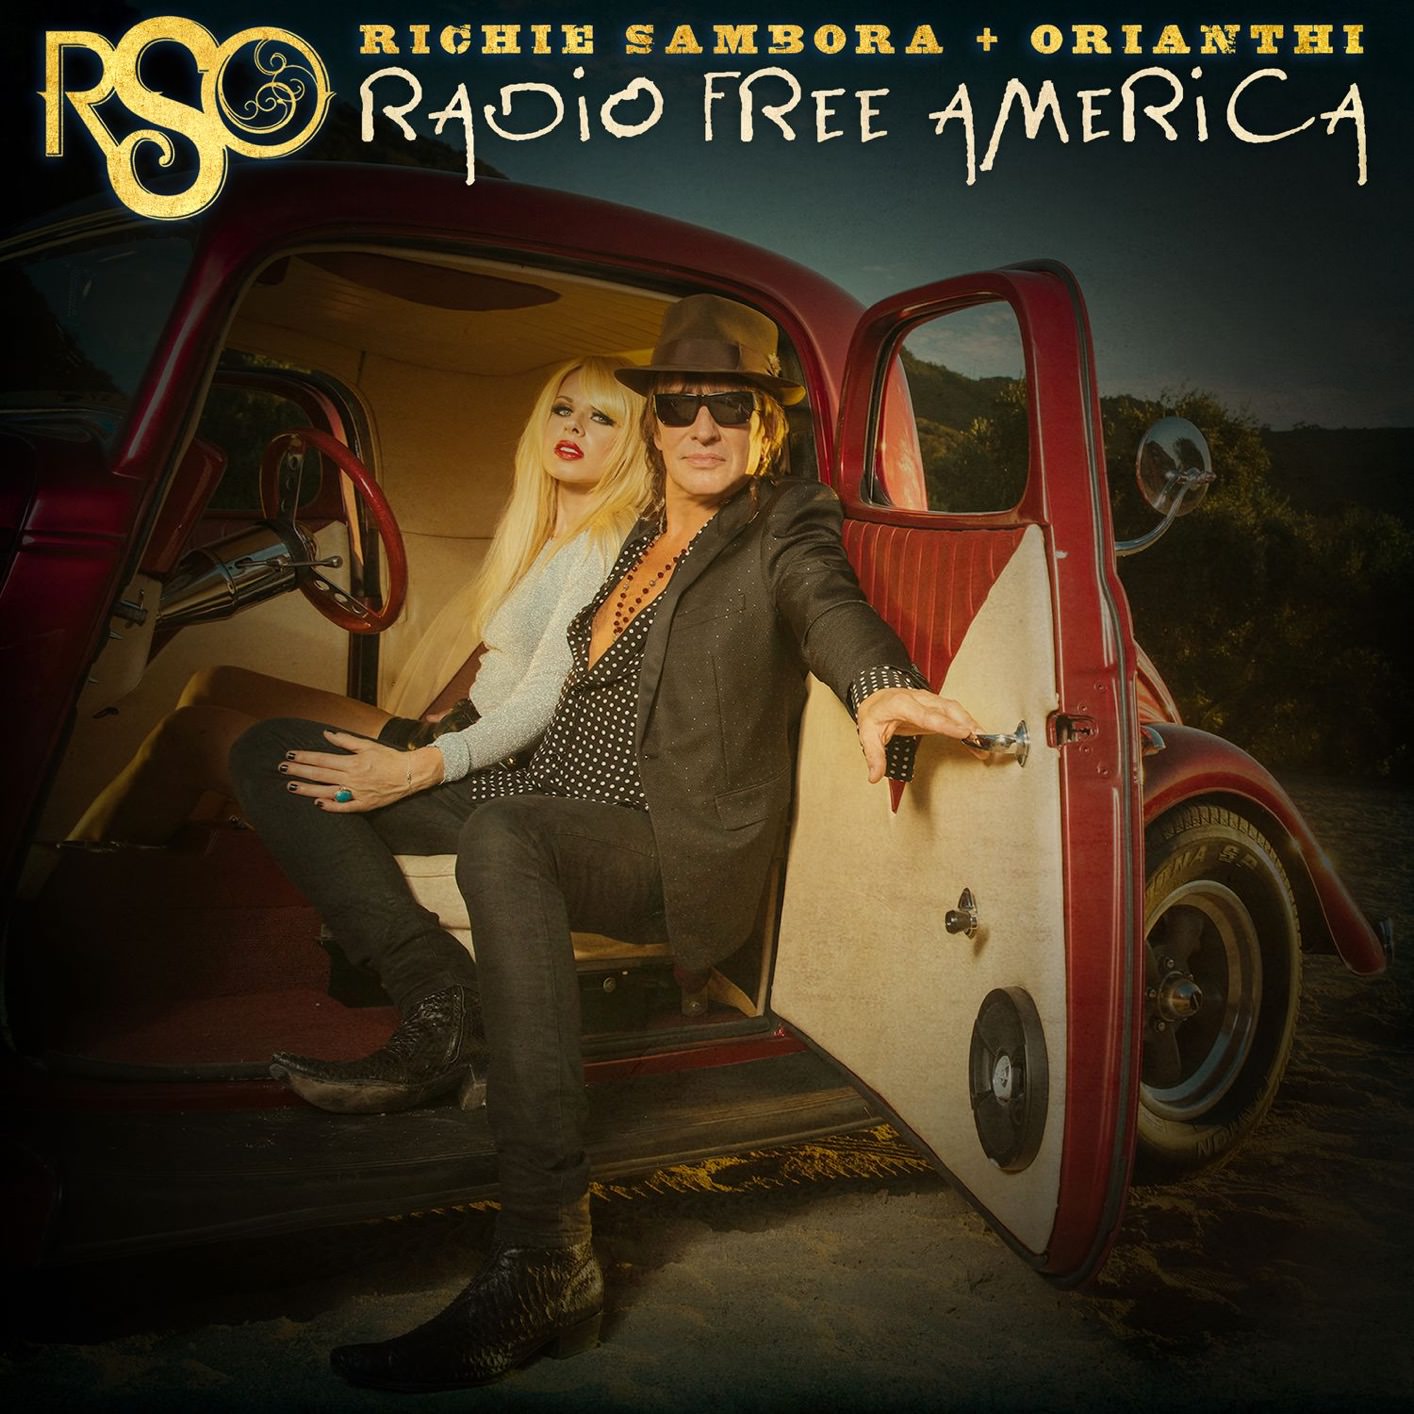 RSO (Richie Sambora + Orianthi) – Radio Free America (2018) [FLAC 24bit/48kHz]